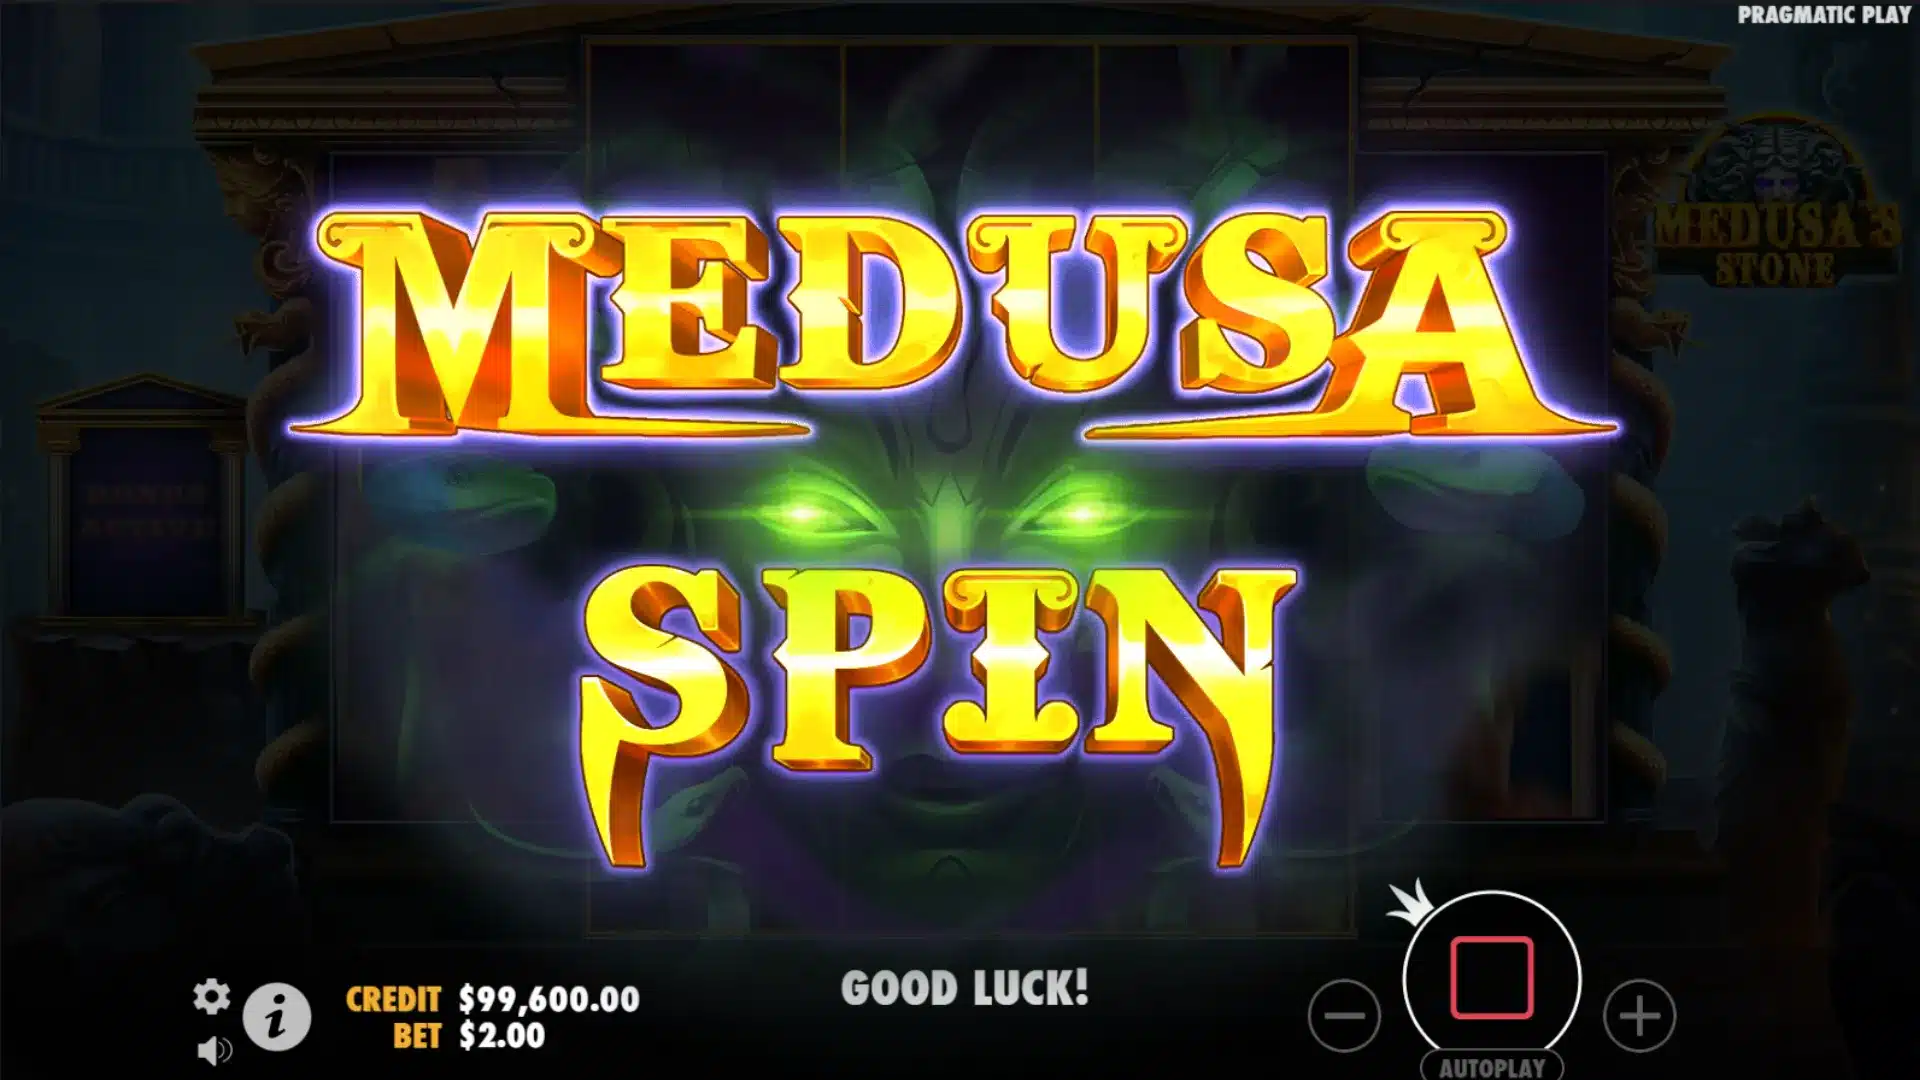 Medusas Stone Demo Slot Review Pragmatic Play